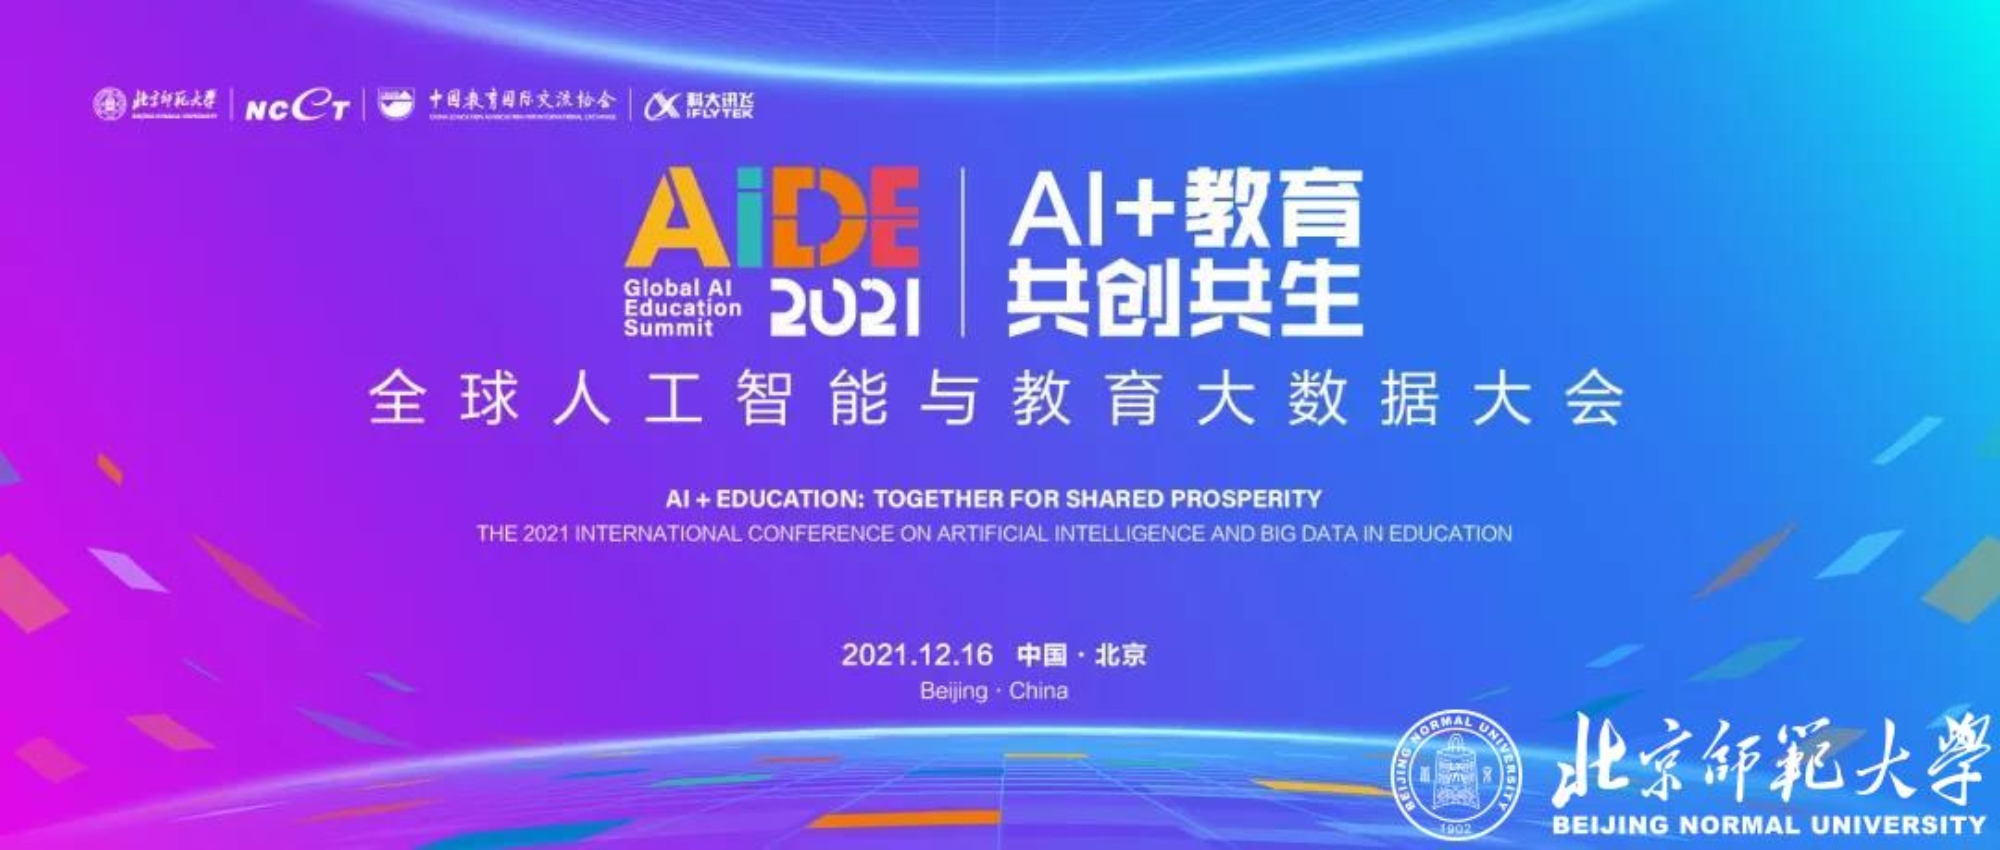 AI+教育共创共生2021全球人工智能与教育大数据大会在北京师范大学举行  image